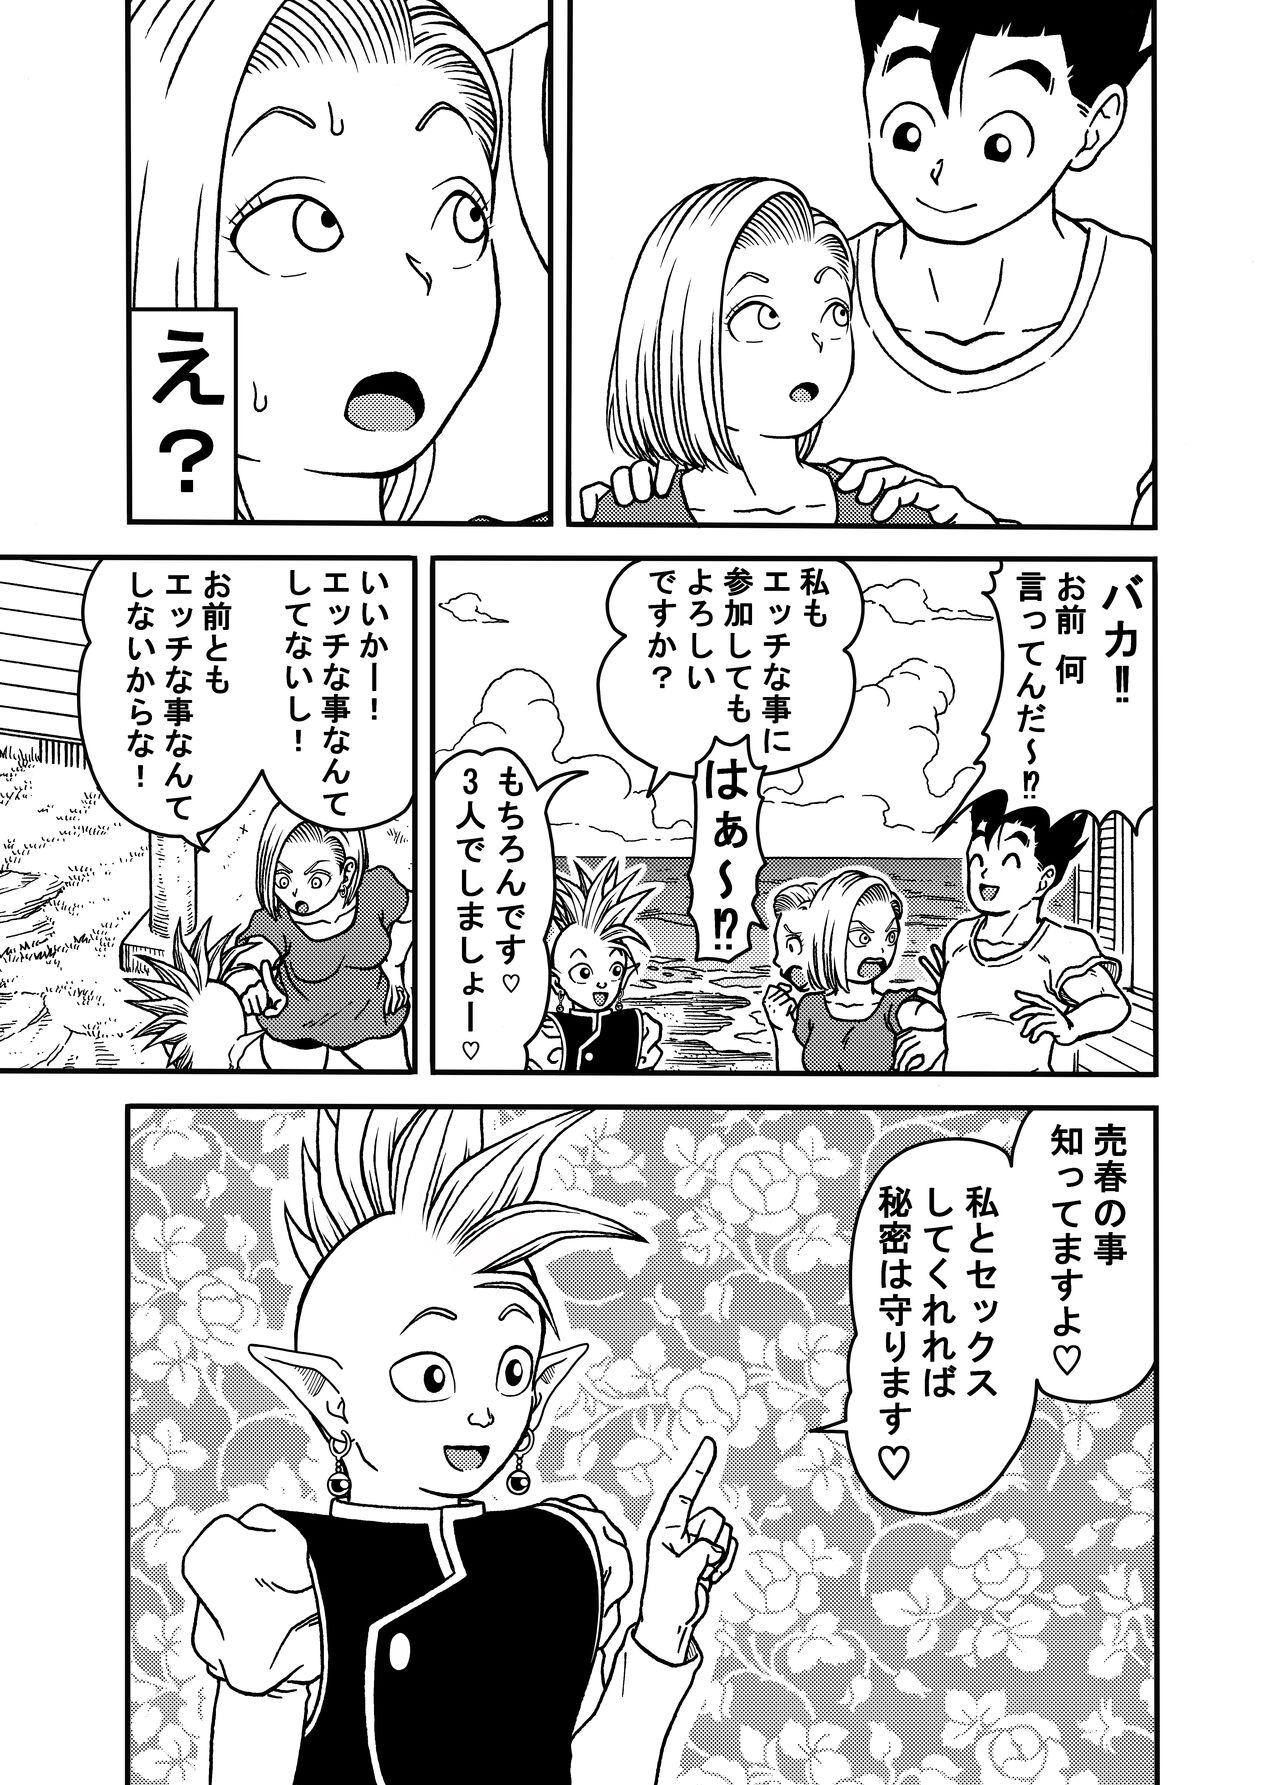 Tiny 18-gou NTR Nakadashi on Parade 5 - Dragon ball z Class - Page 9